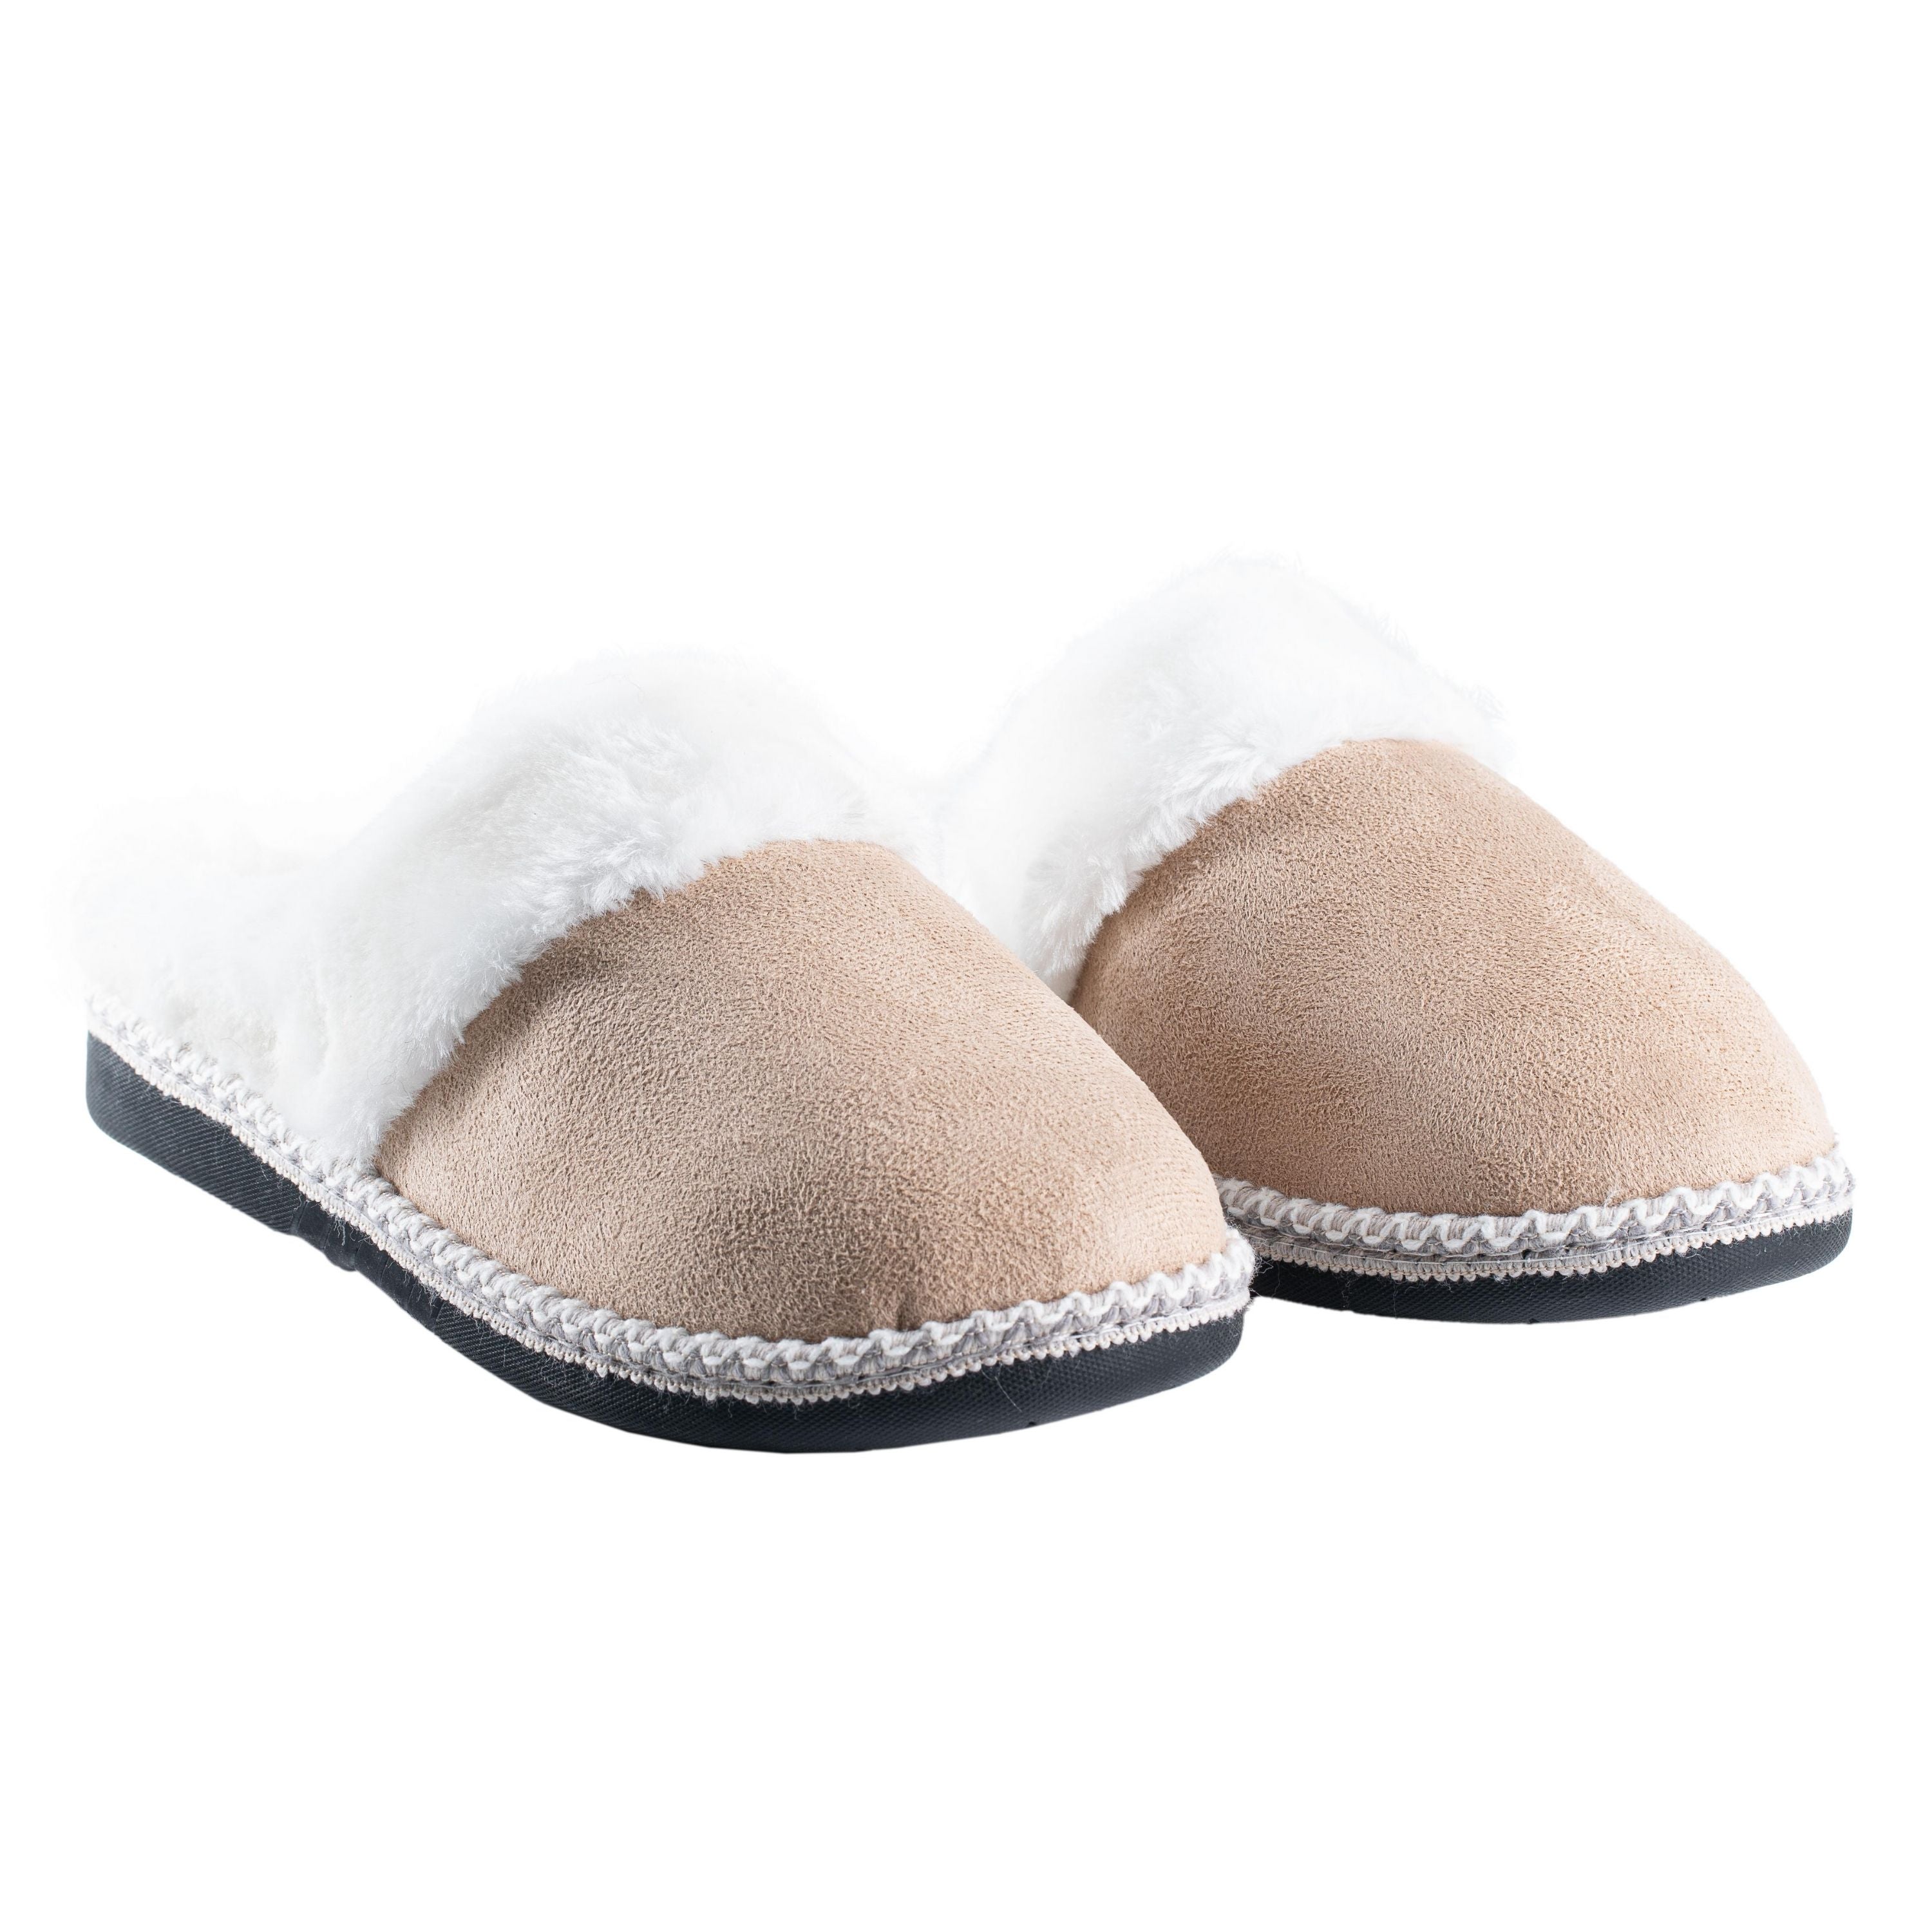 "Linderhof" slippers - Women's